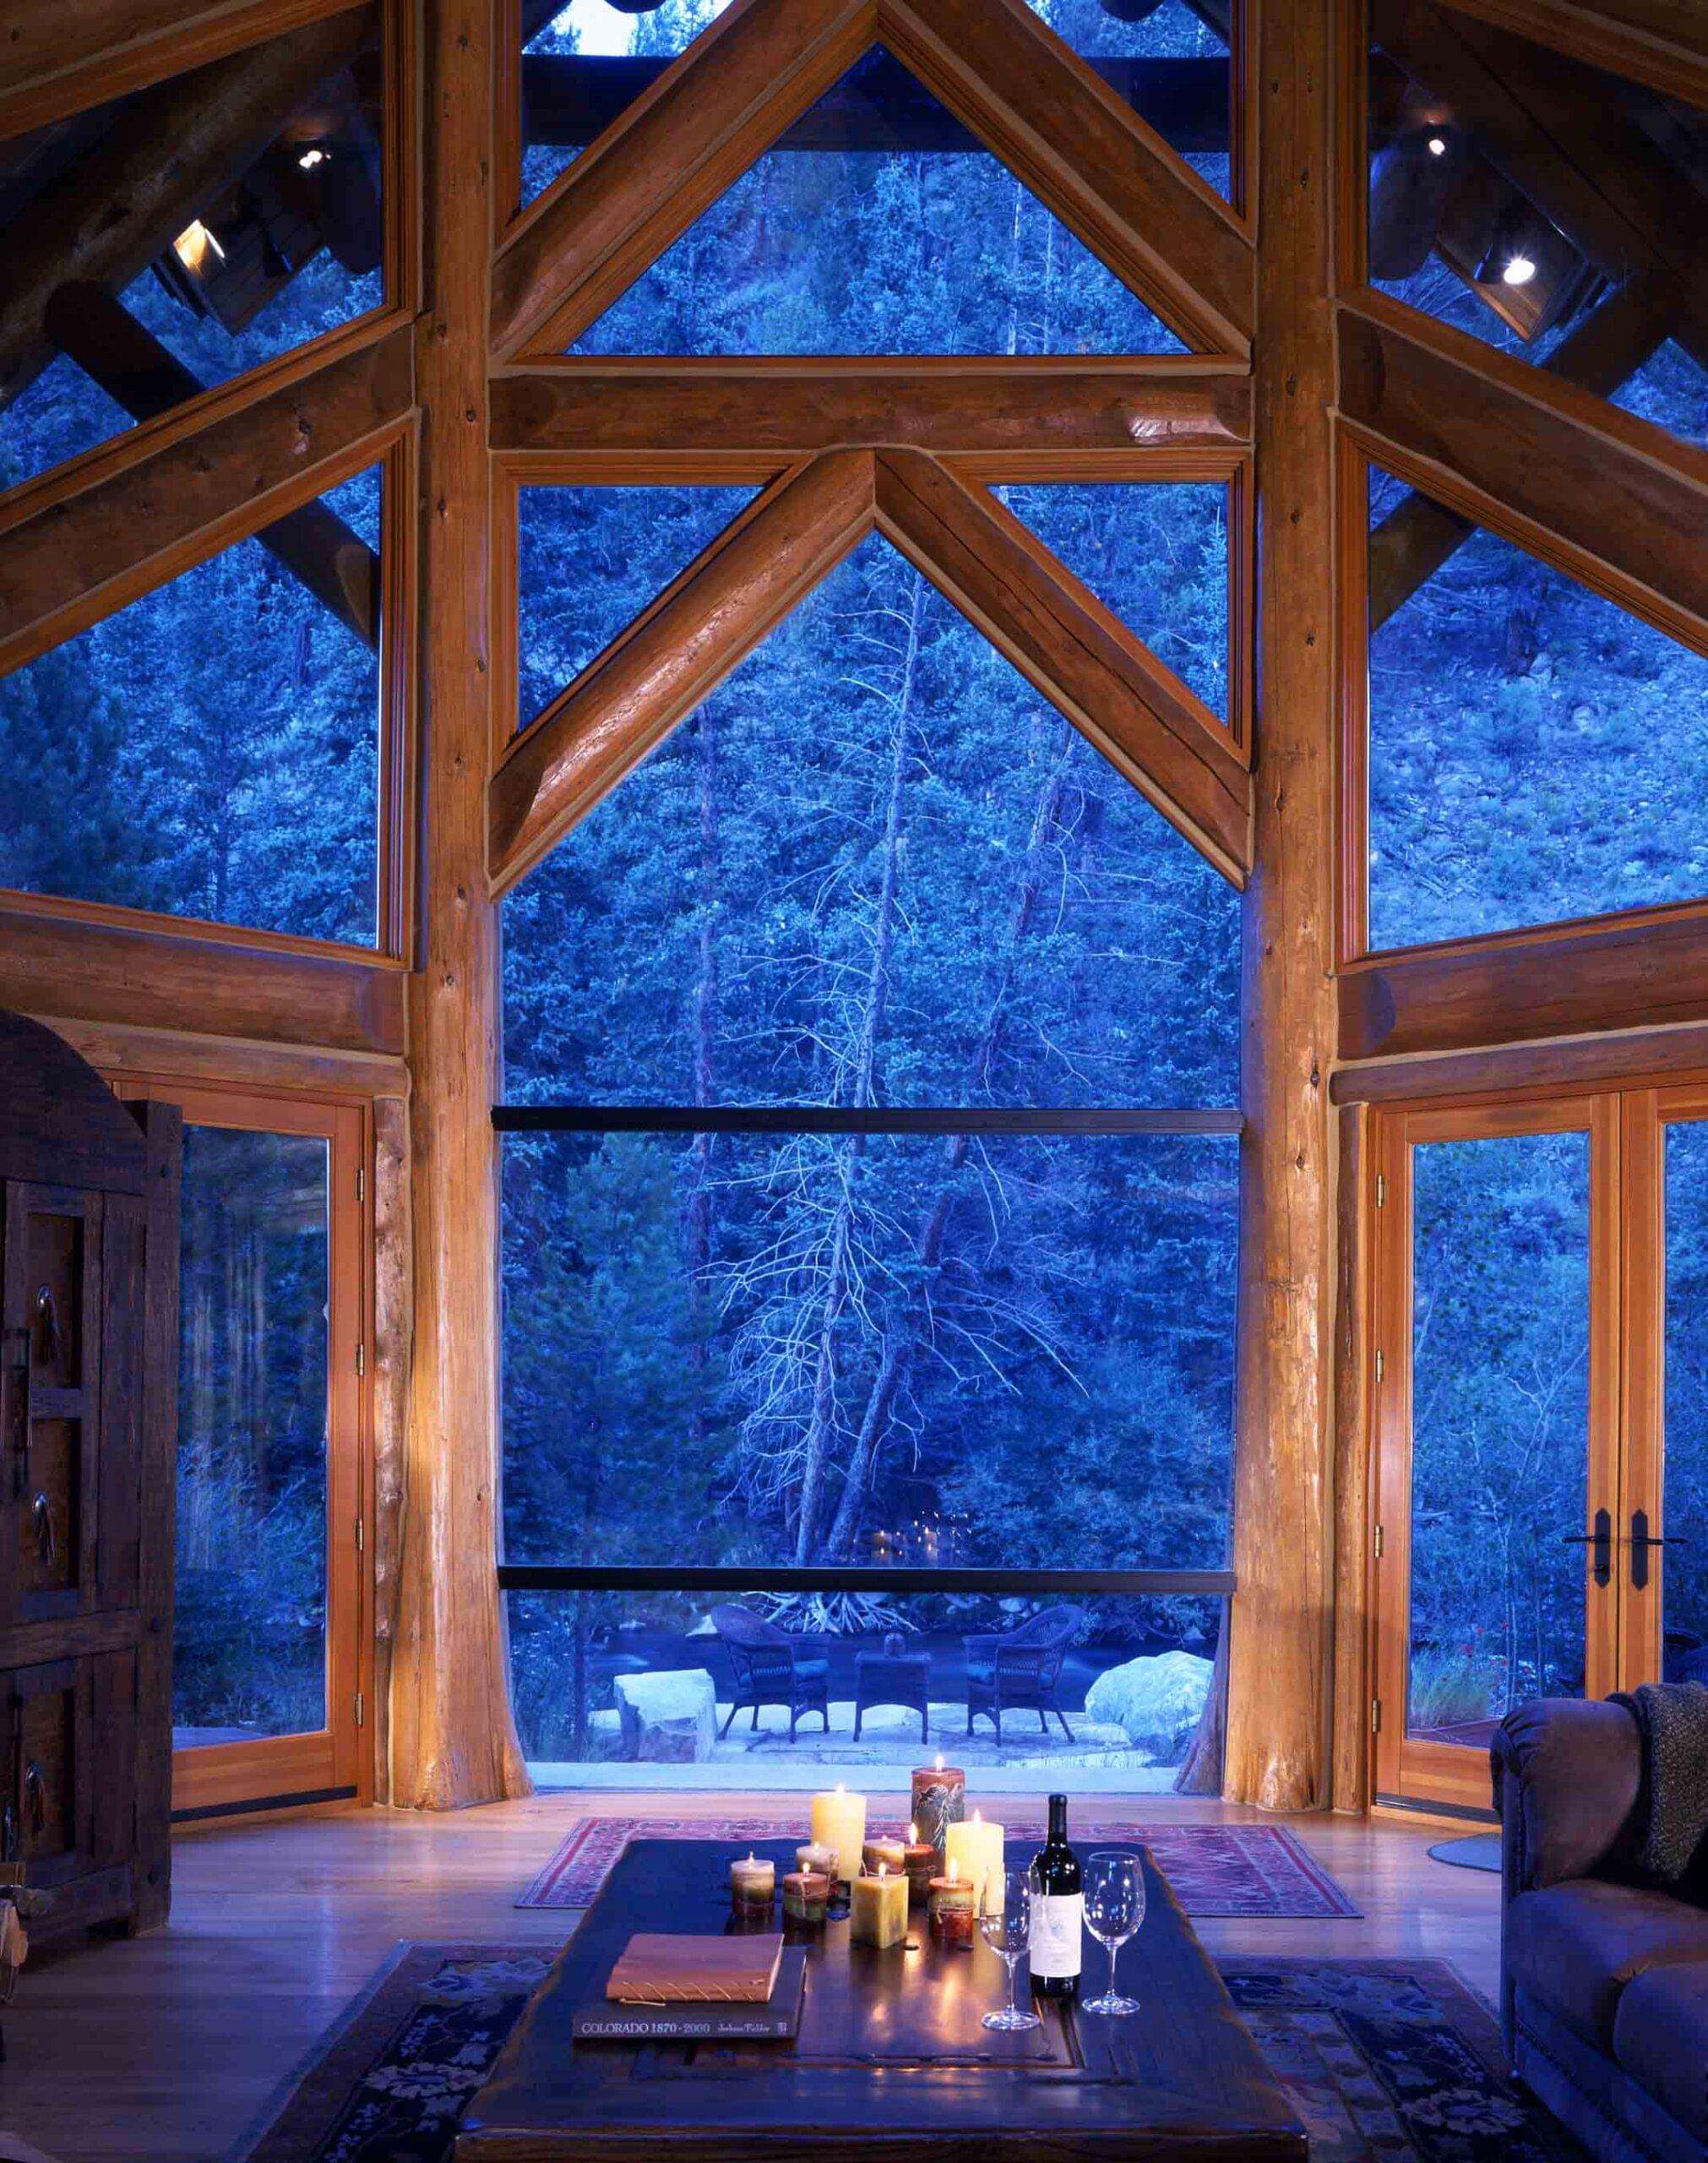 Trimless log cabin window invites beauty